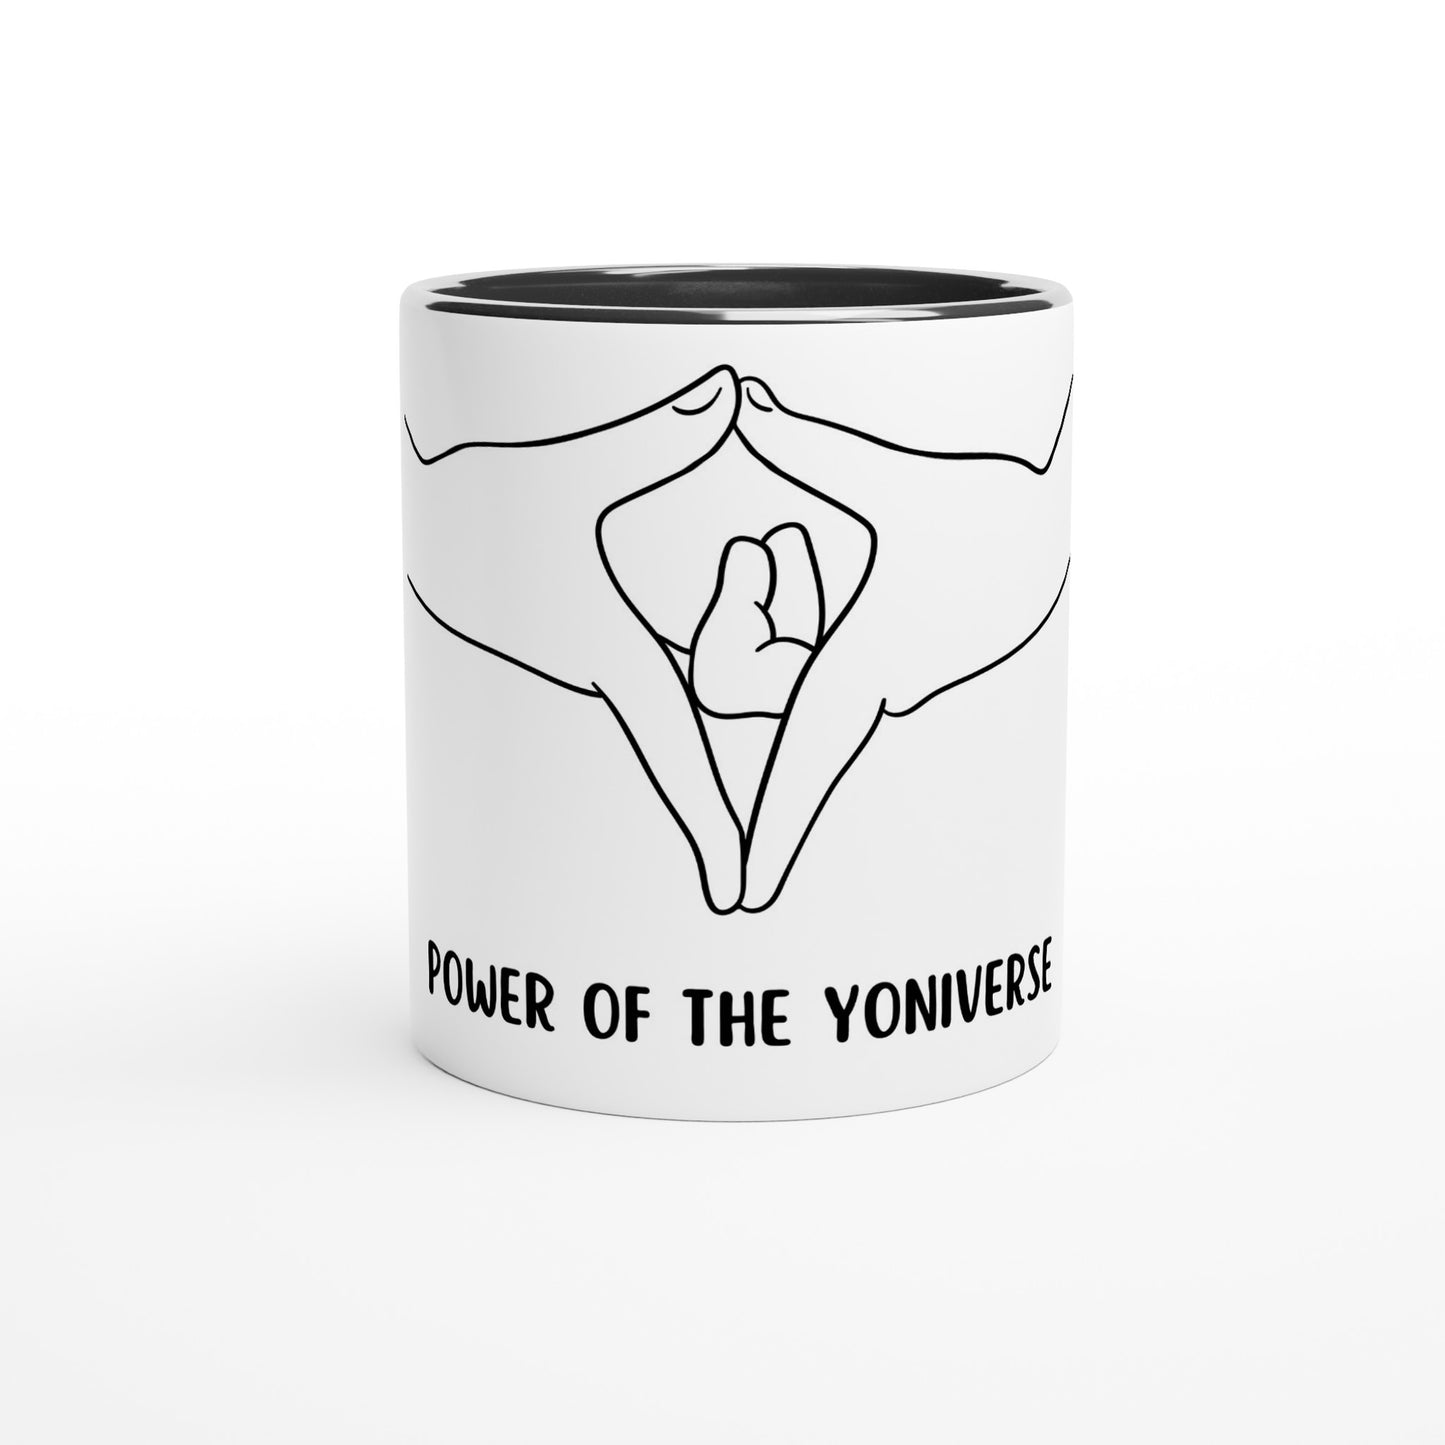 Farbige "Power of the Yoniverse" - Keramiktasse (325ml) farbiger Henkel, Rand, Innenbereich, Kaffeetasse Teetasse Yonitasse Keramikbecher 🌸 Yoni Motiv Yoniart Yoni Art